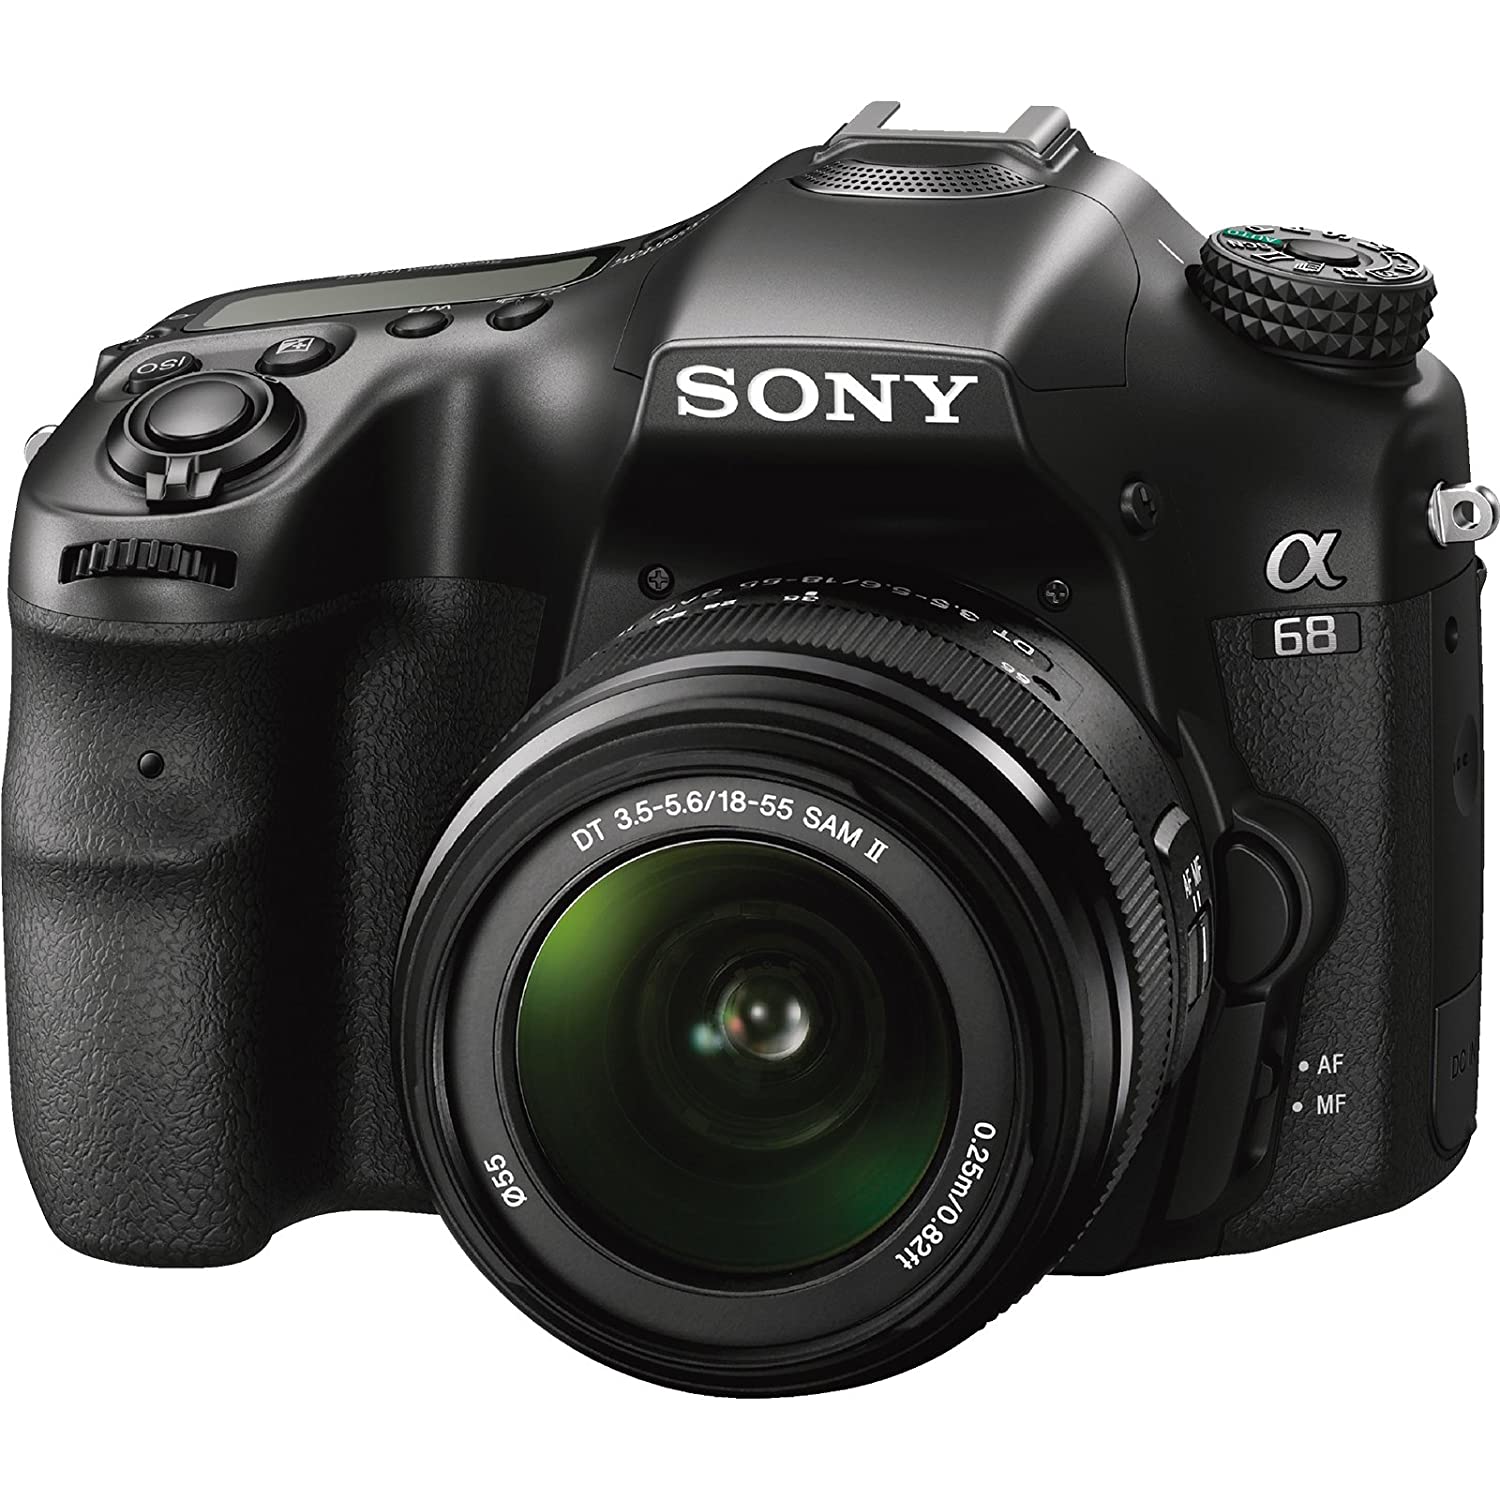 Sony Alpha A68 Digital SLR Camera With 18-55mm Single Lens